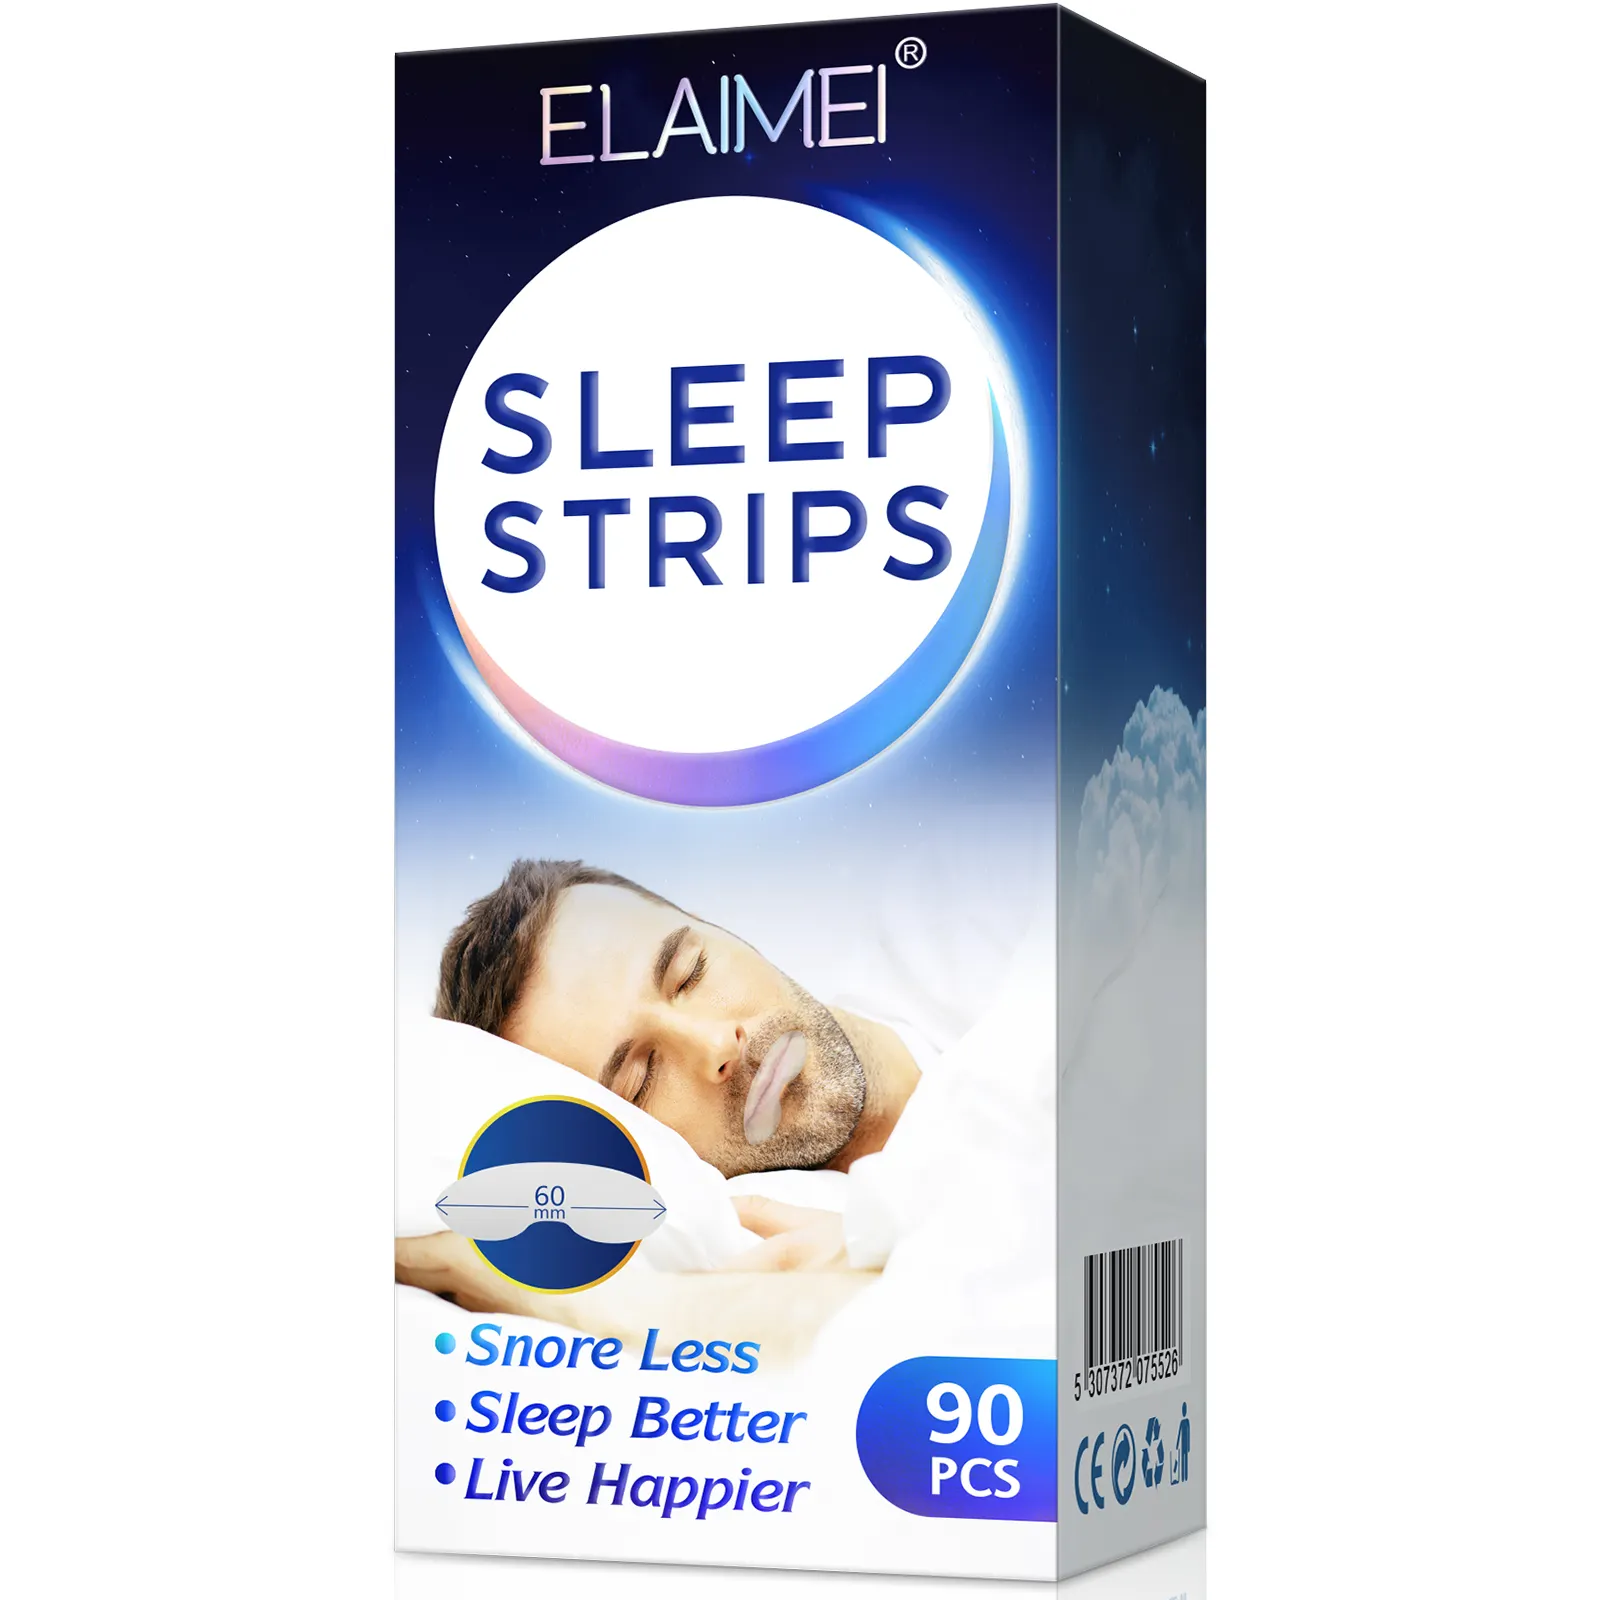 ELAIMEI 90 Pcs Lip Shape Sleep Strips Improved Nighttime Sleeping Relieves Snoring Mouth Tape